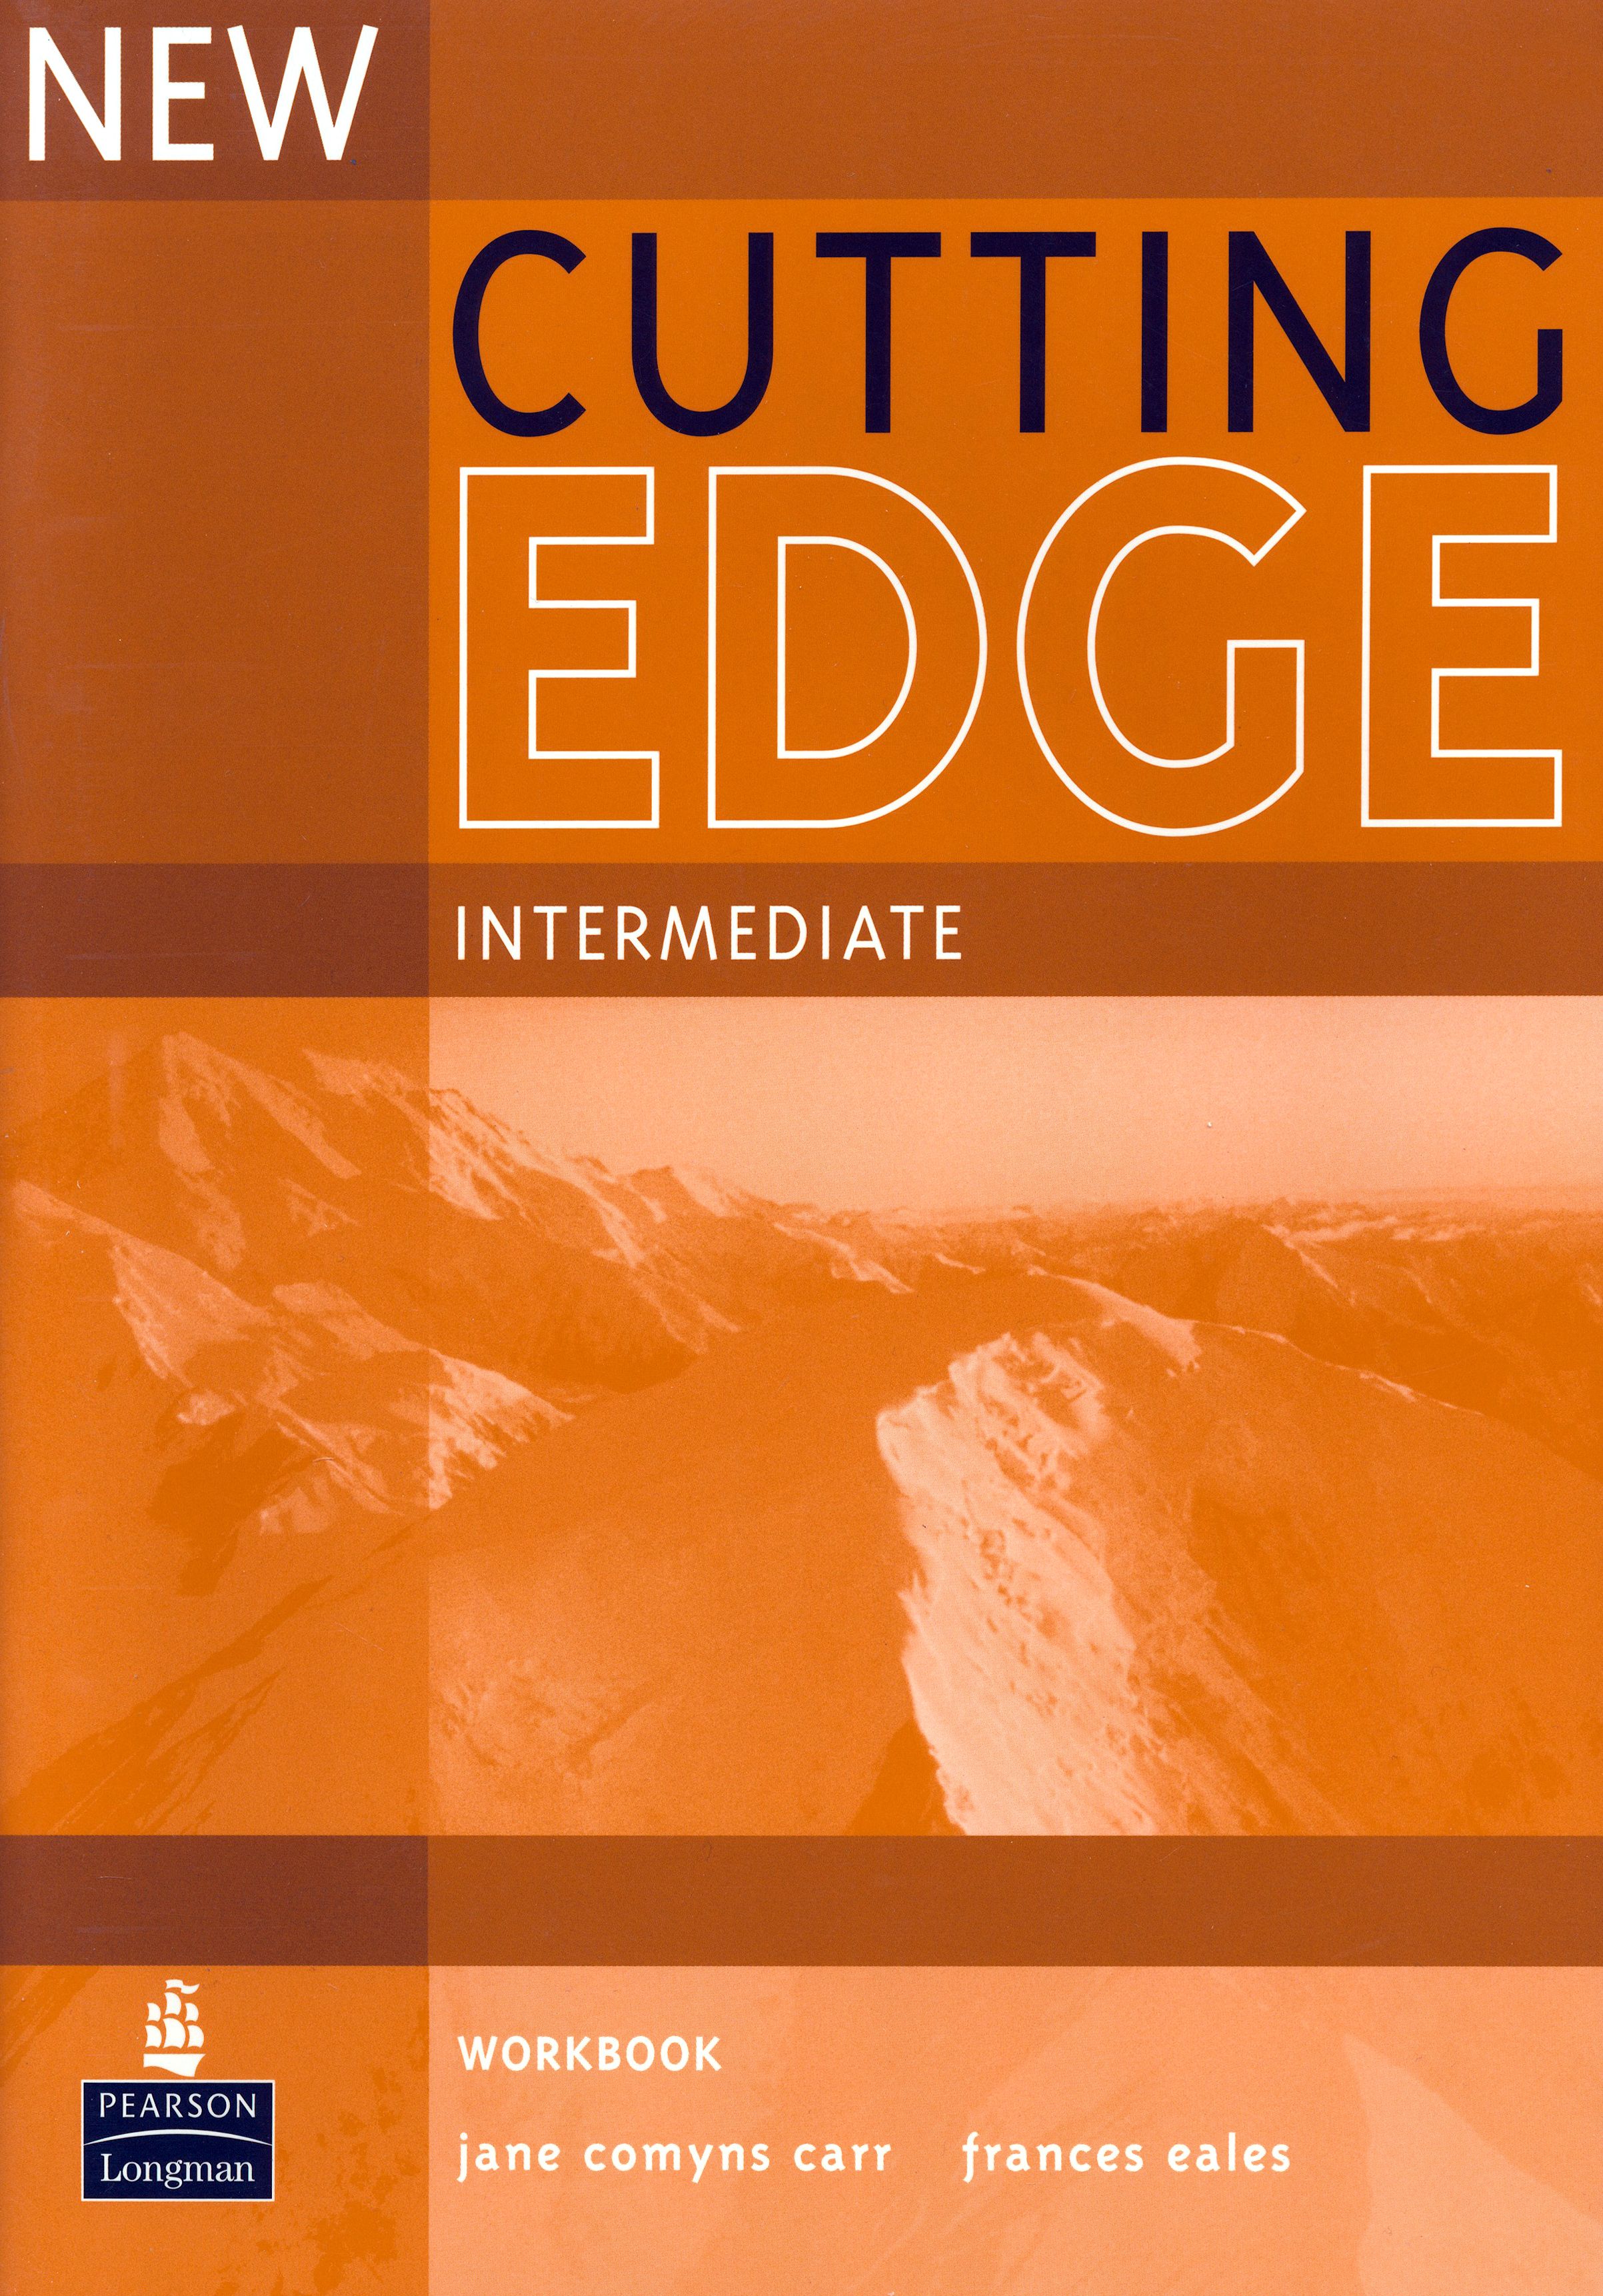 Cutting Edge Intermediate 2005. New Cutting Edge Intermediate Workbook. Cutting Edge Intermediate 3rd Edition. Cutting Edge Intermediate Keys Workbook.